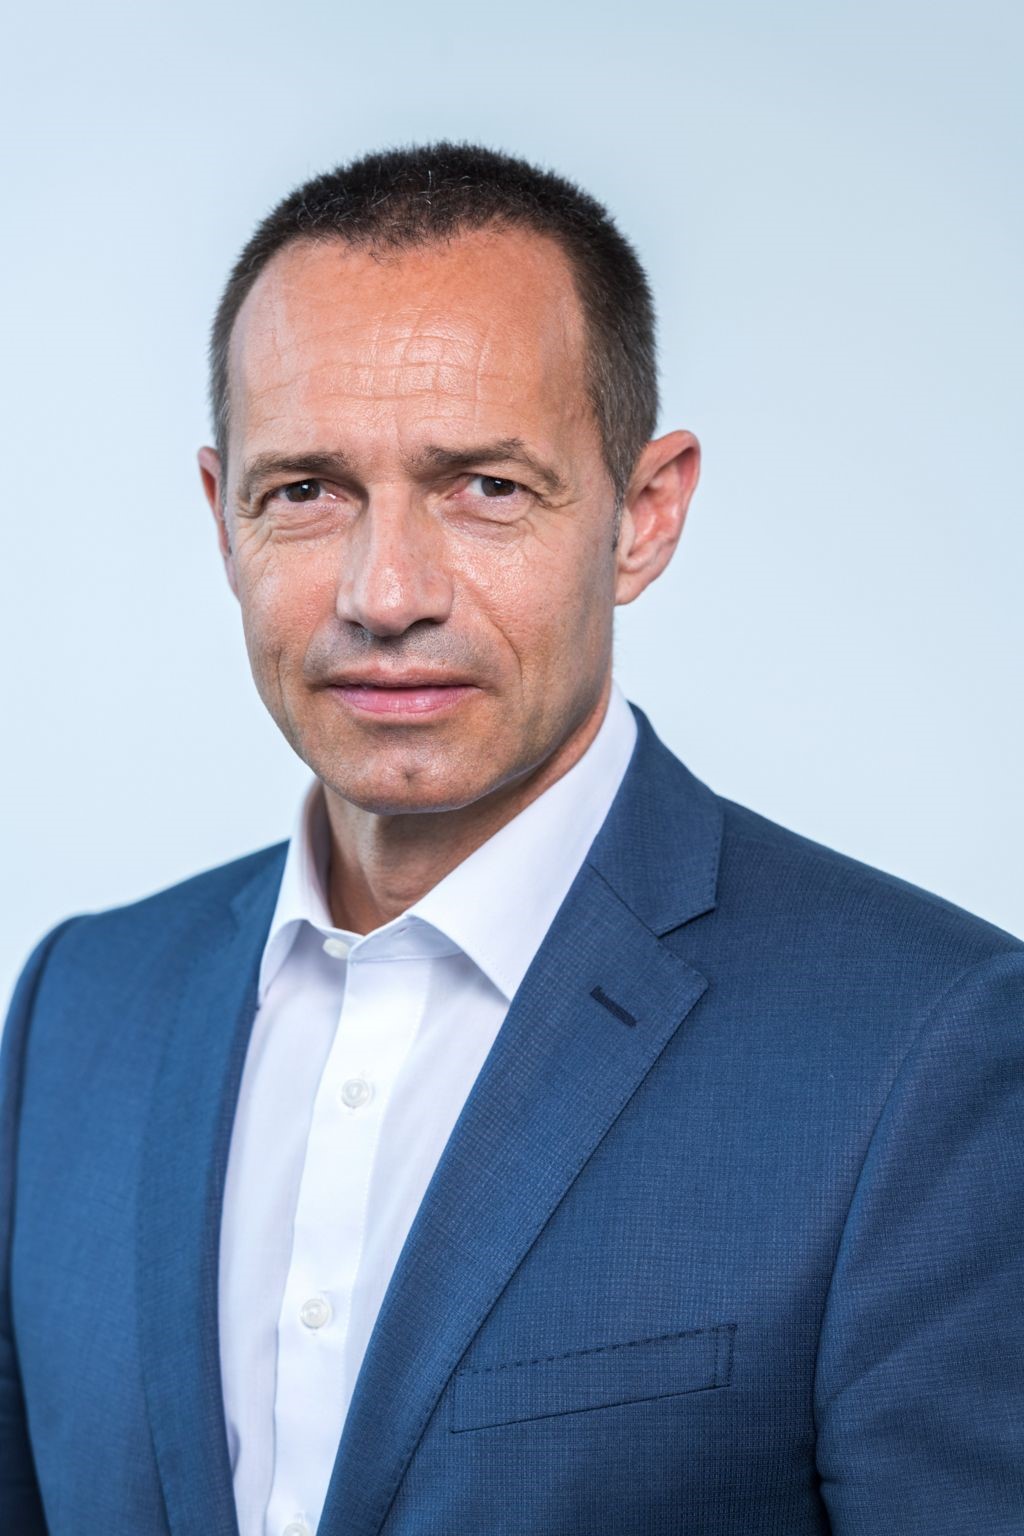 Jürgen Keller neu im Vorstand der AVAG Holding SE